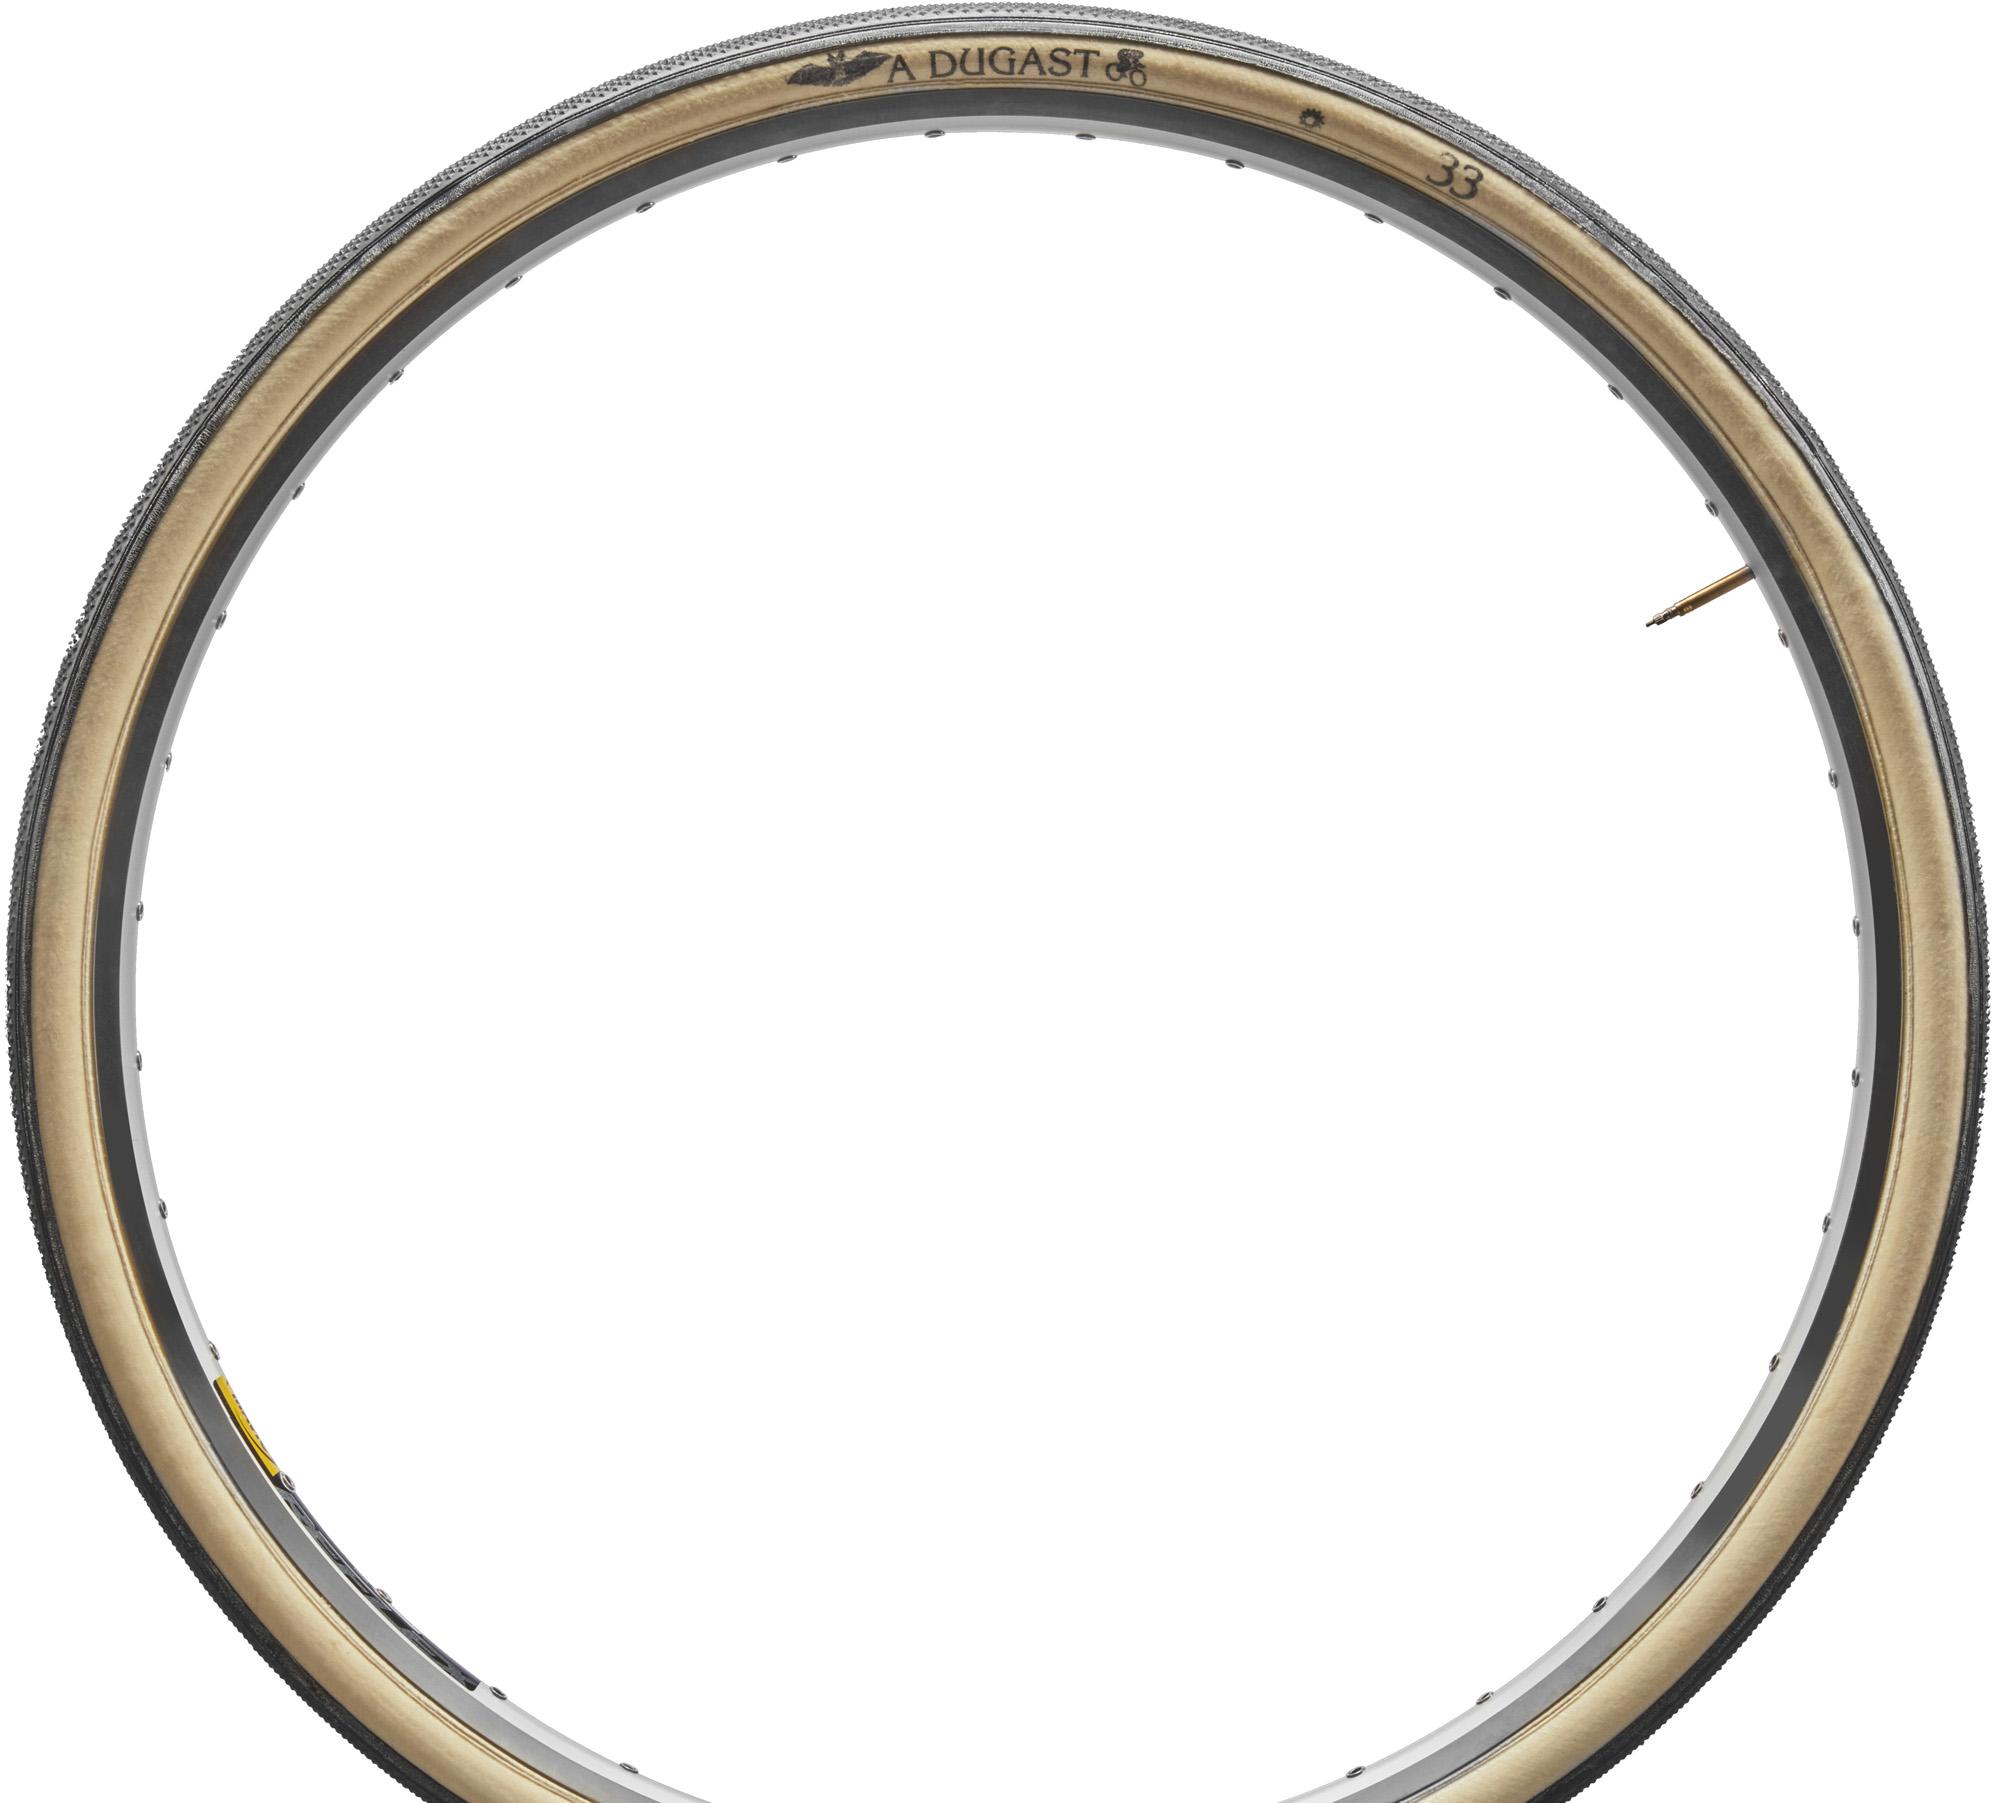 Dugast Pipistrello Neoprene Cyclocross Tyre - Black/tan Wall